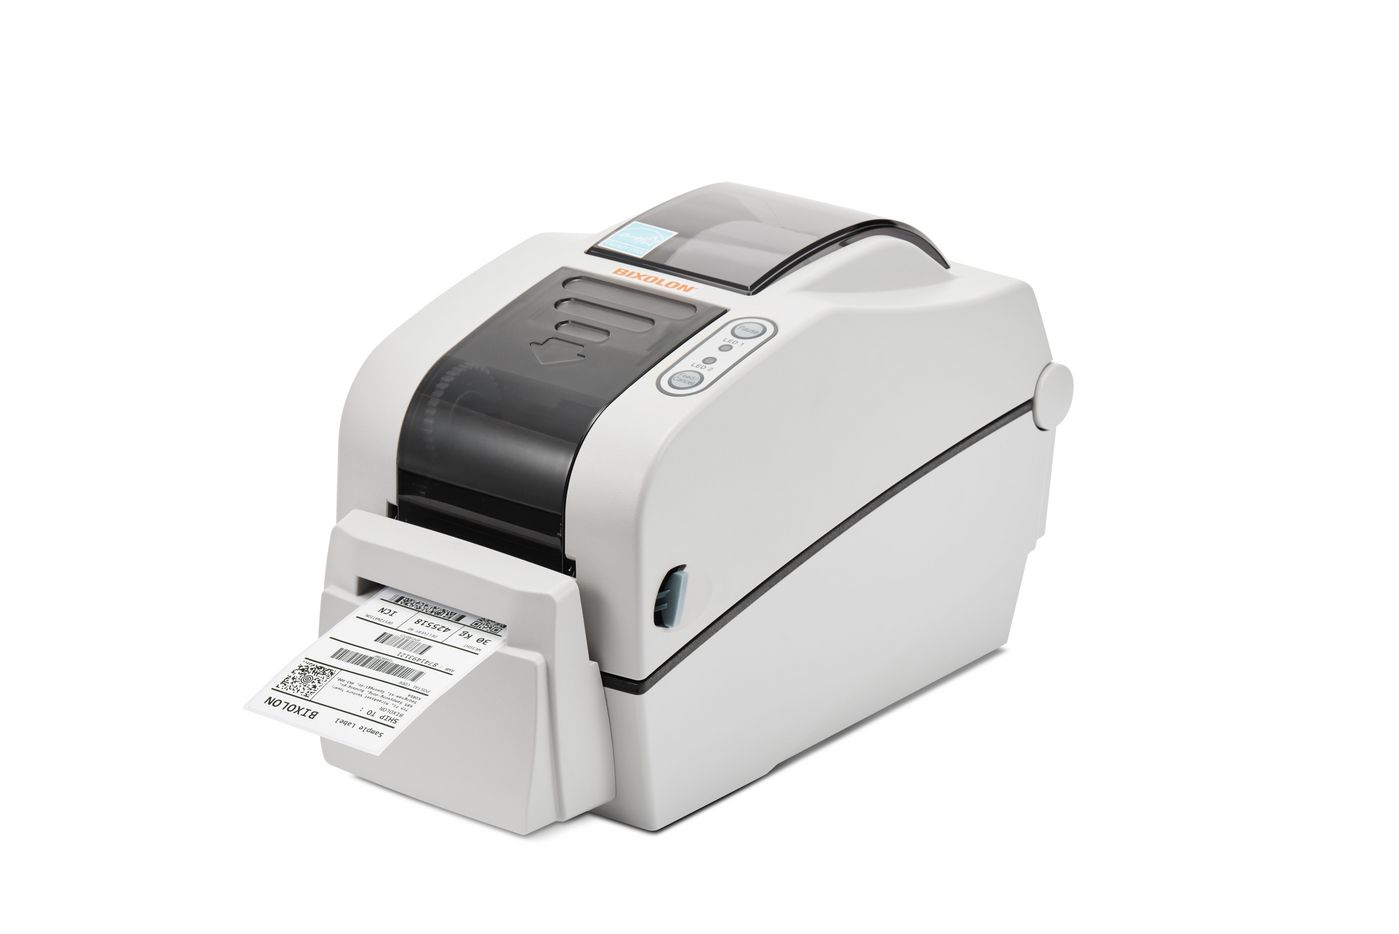 Slp-tx220e -  Label Printer - Direct Thermal - USB / Parallel